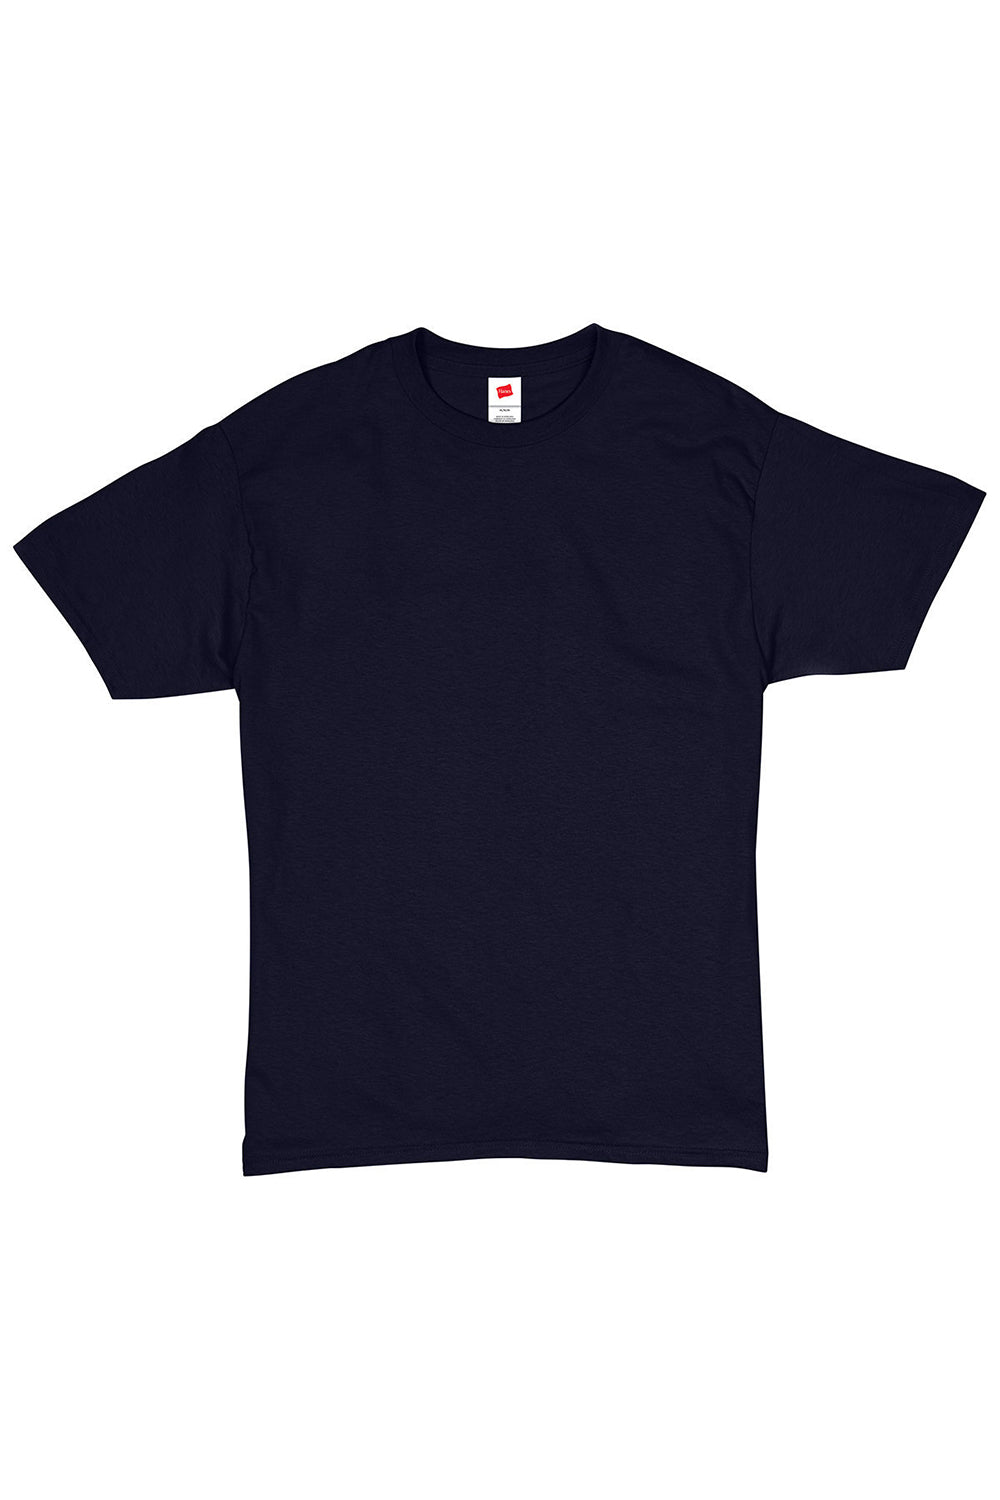 Hanes 5280 Mens ComfortSoft Short Sleeve Crewneck T-Shirt Athletic Navy Blue Flat Front